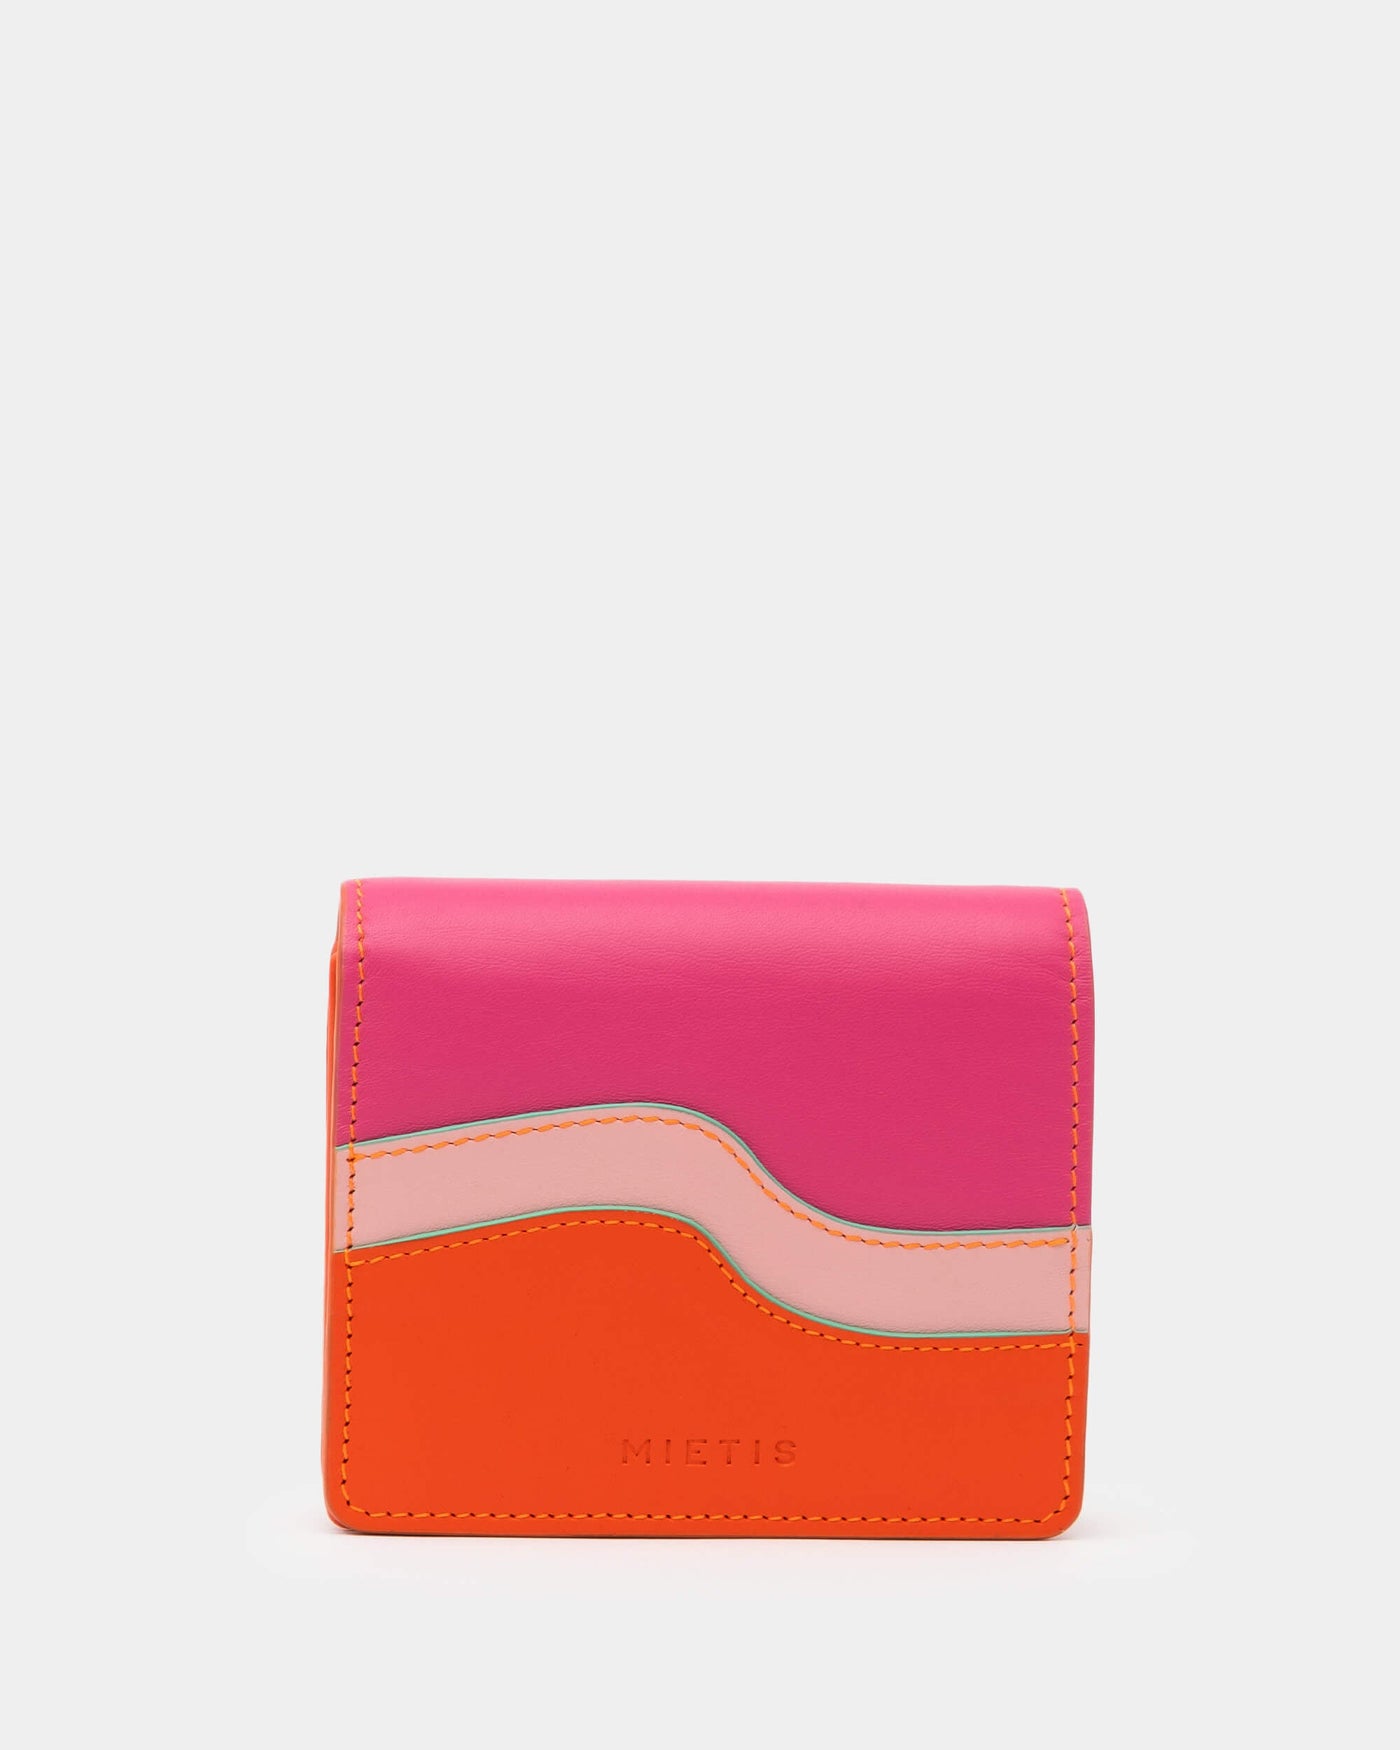 Waves Wallet Fuchsia / Orange